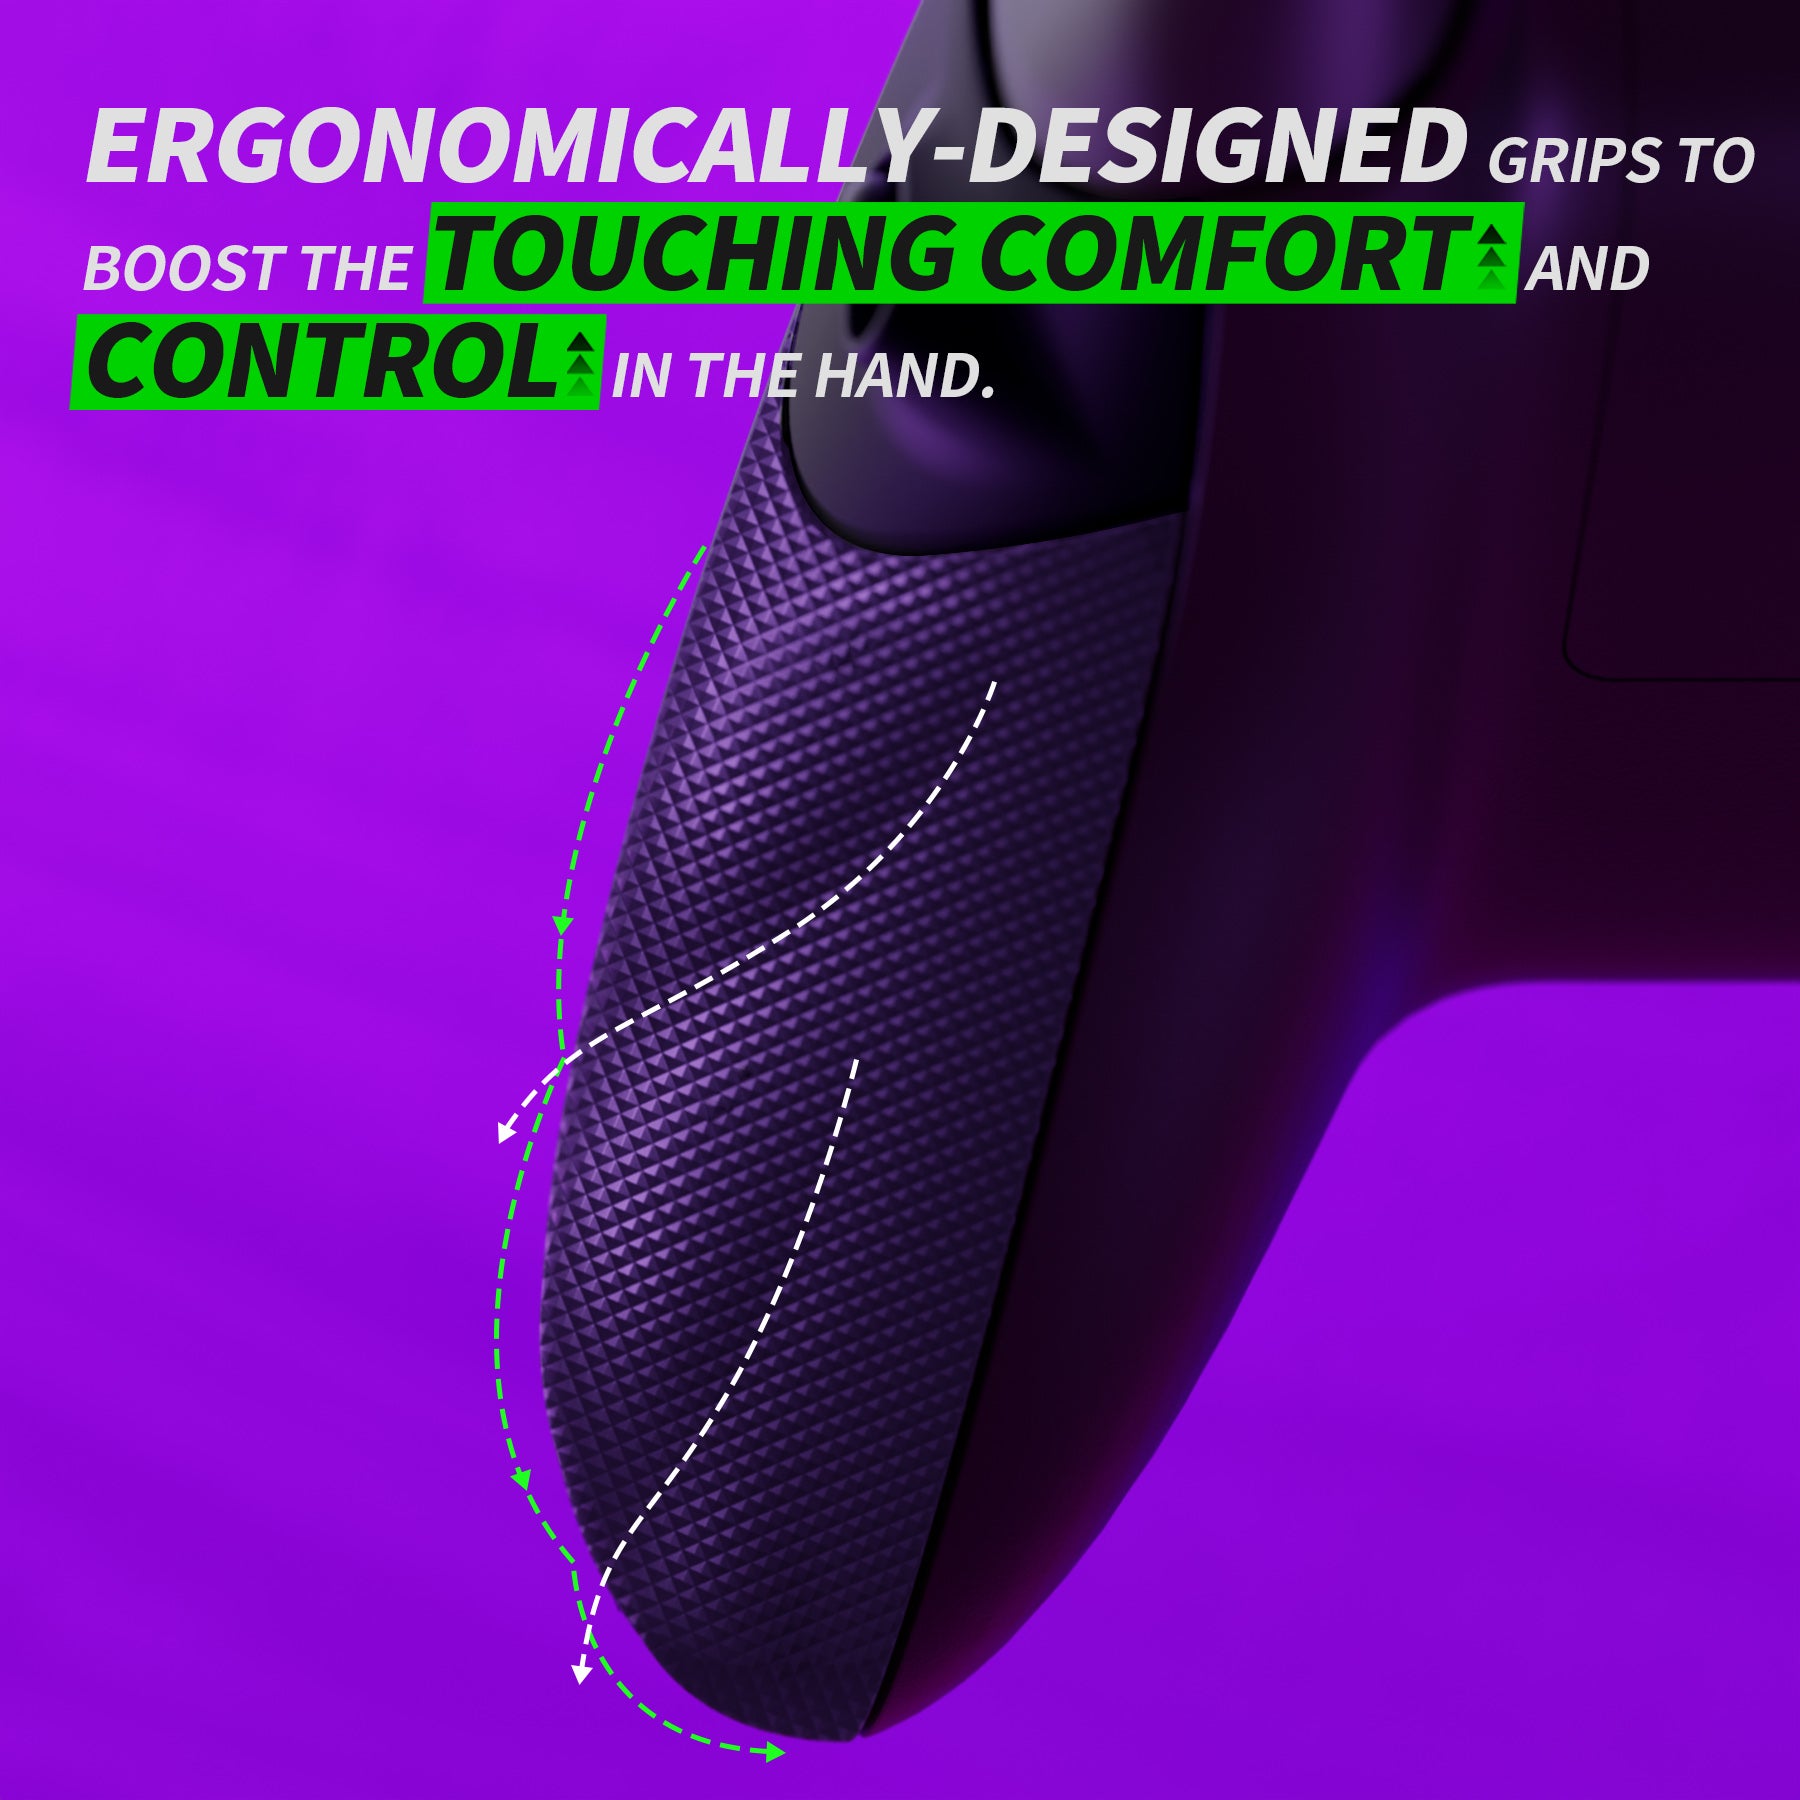 eXtremeRate Flexor Rubberized Side Rails Grips Trigger Stop Kit for Xbox Series X/S Controller, Diamond Textured Black Anti-Slip Ergonomic Trigger